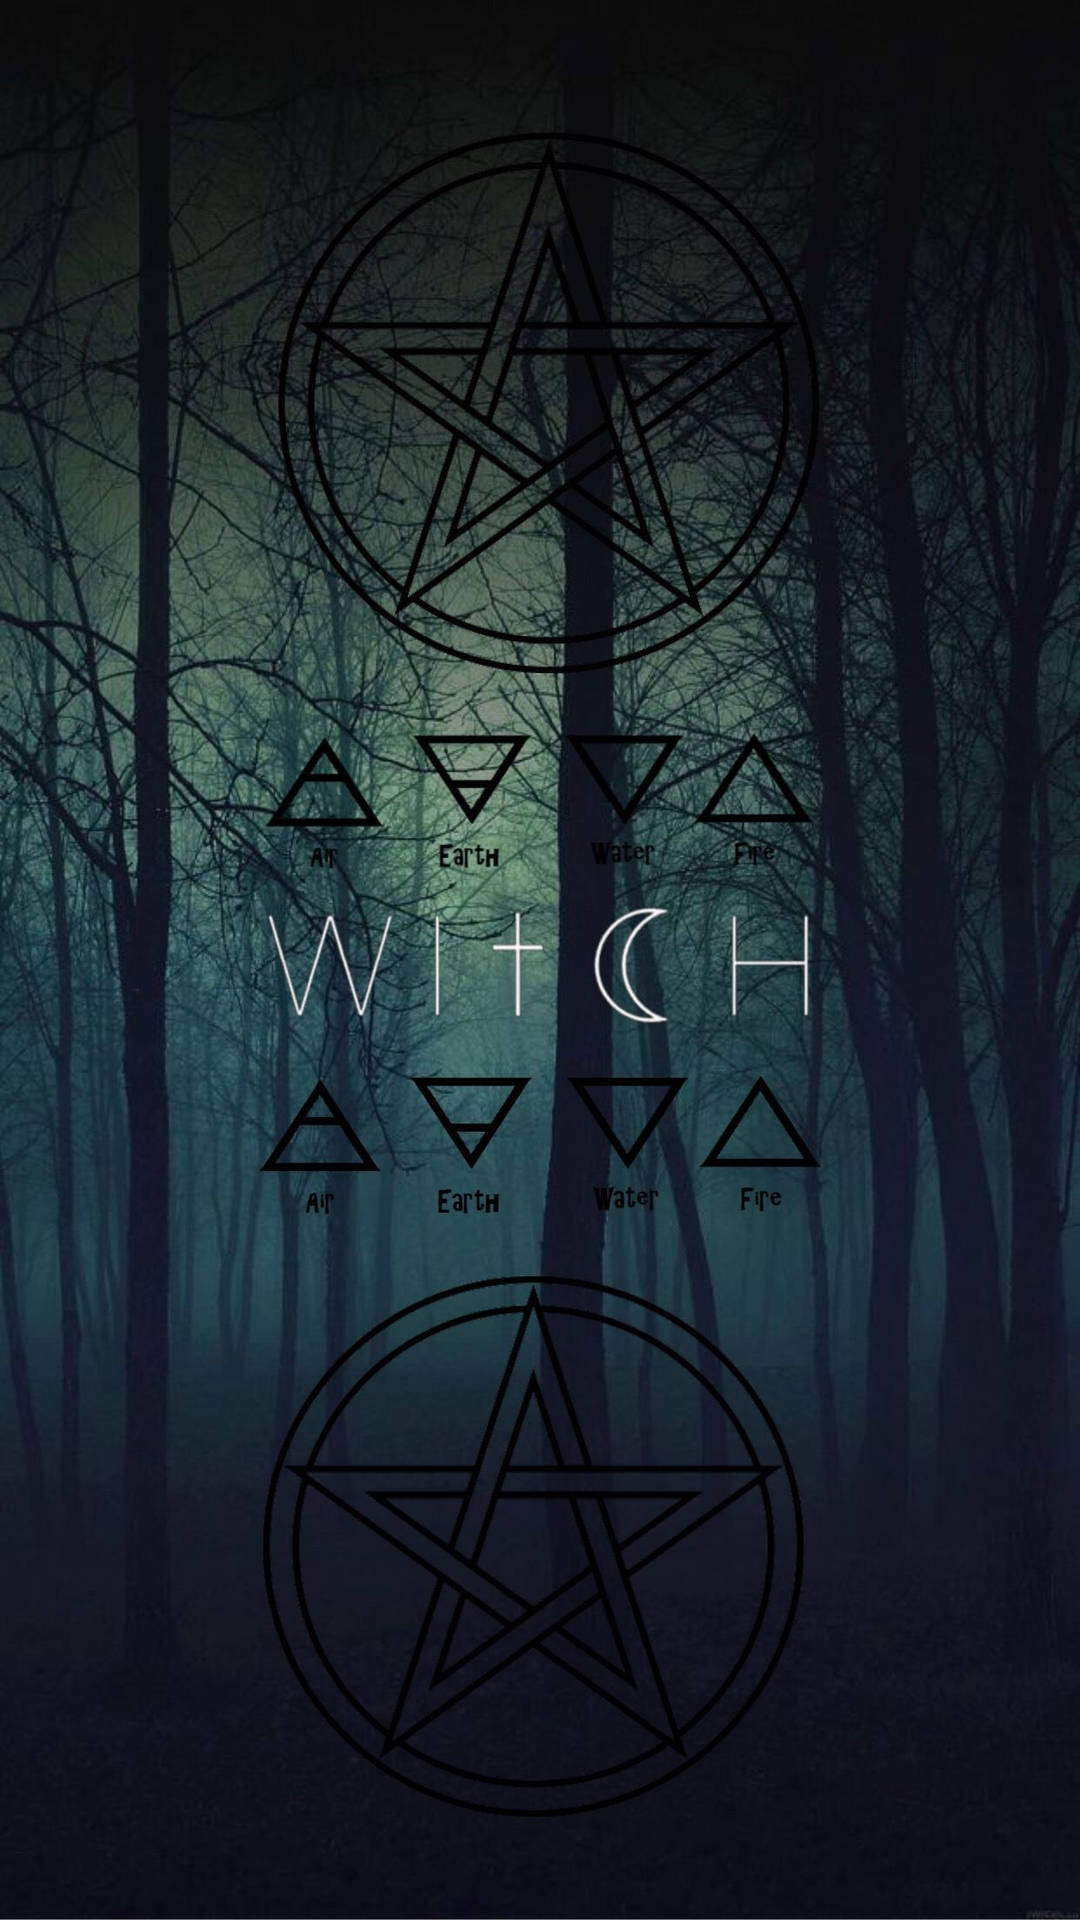 Witchcraft Logos Wallpaper